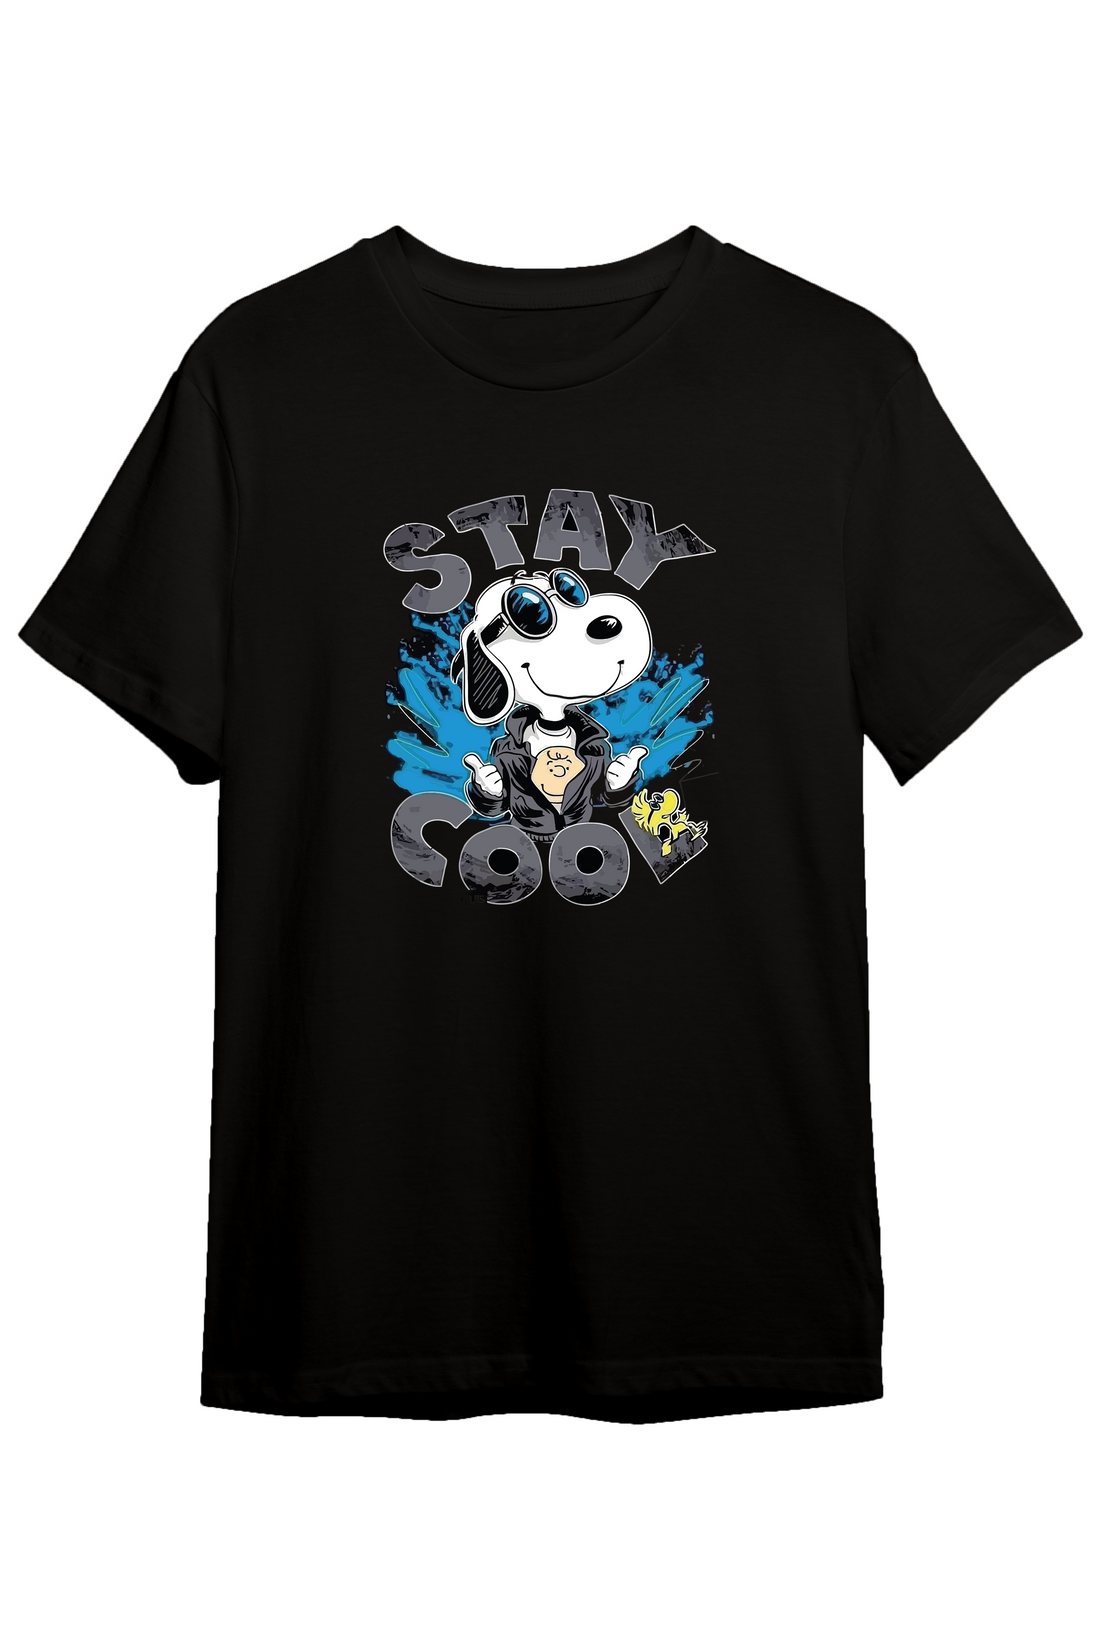 Snoopy Stay Cool - Regular Tshirt